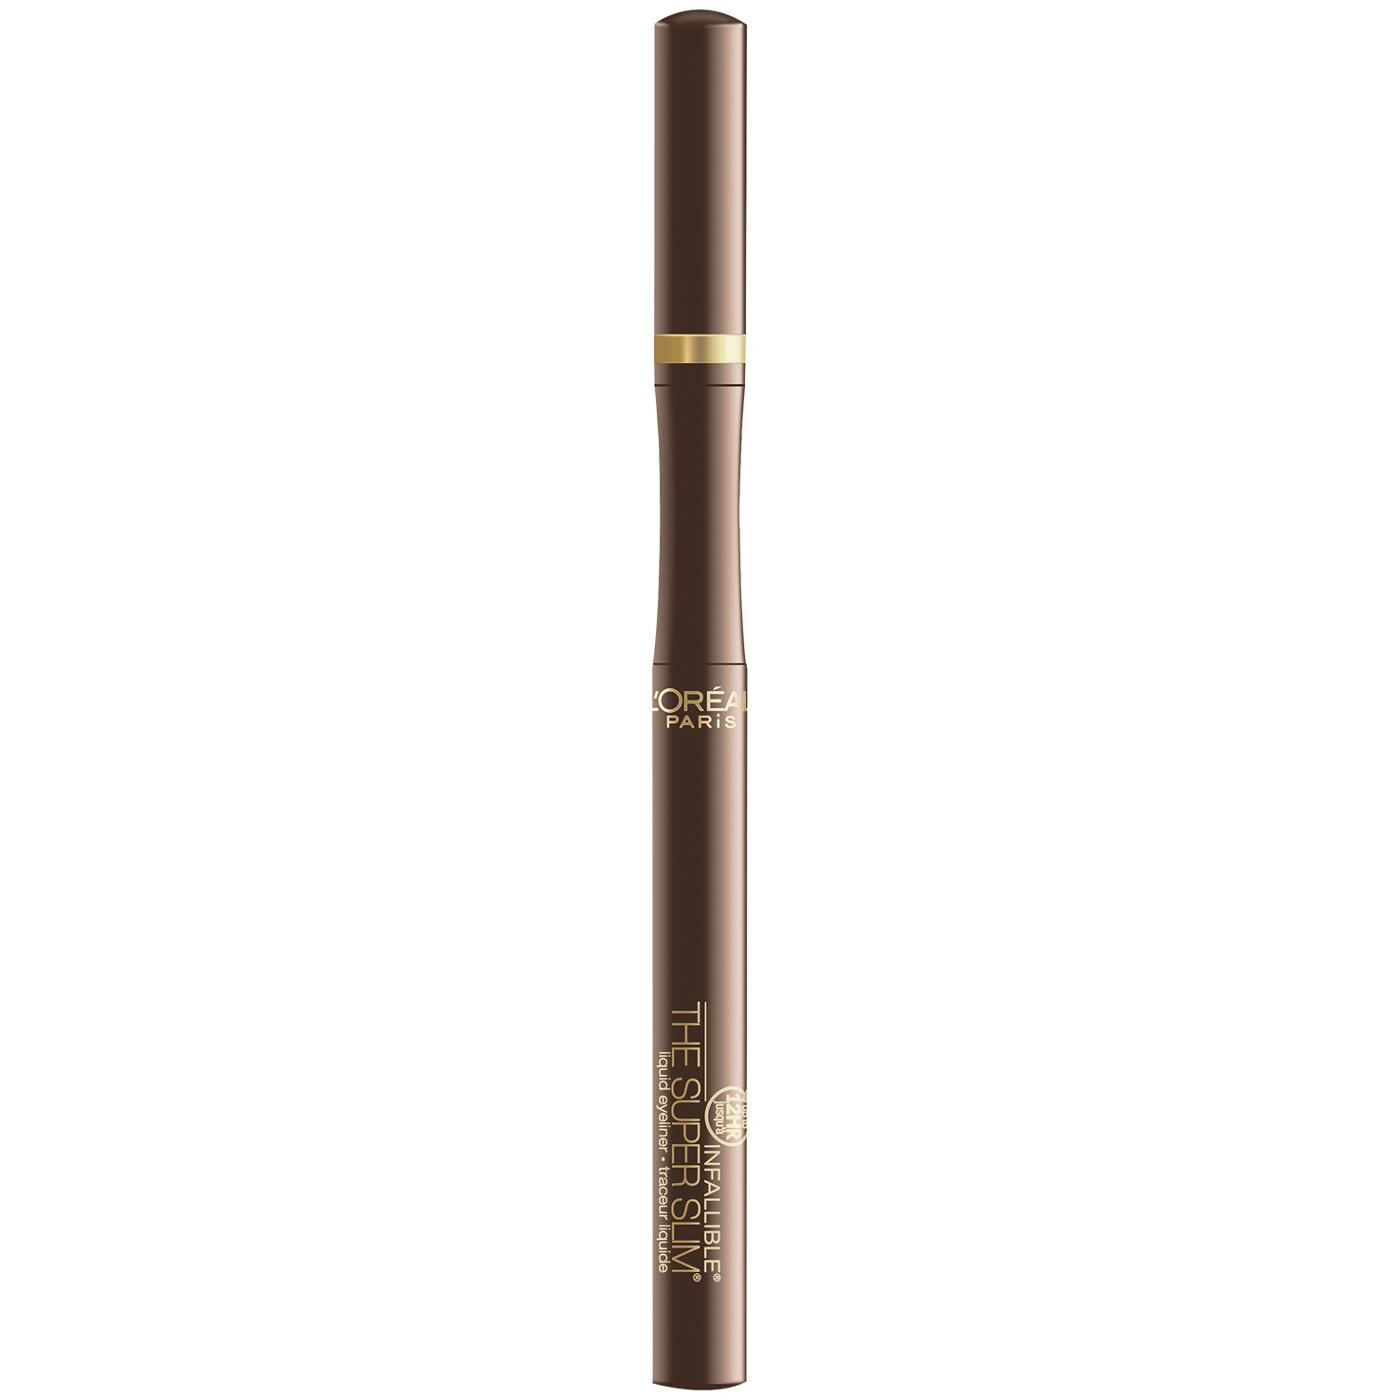 L'Oréal Paris Infallible Super Slim Long-Lasting Liquid Eyeliner Brown; image 2 of 3